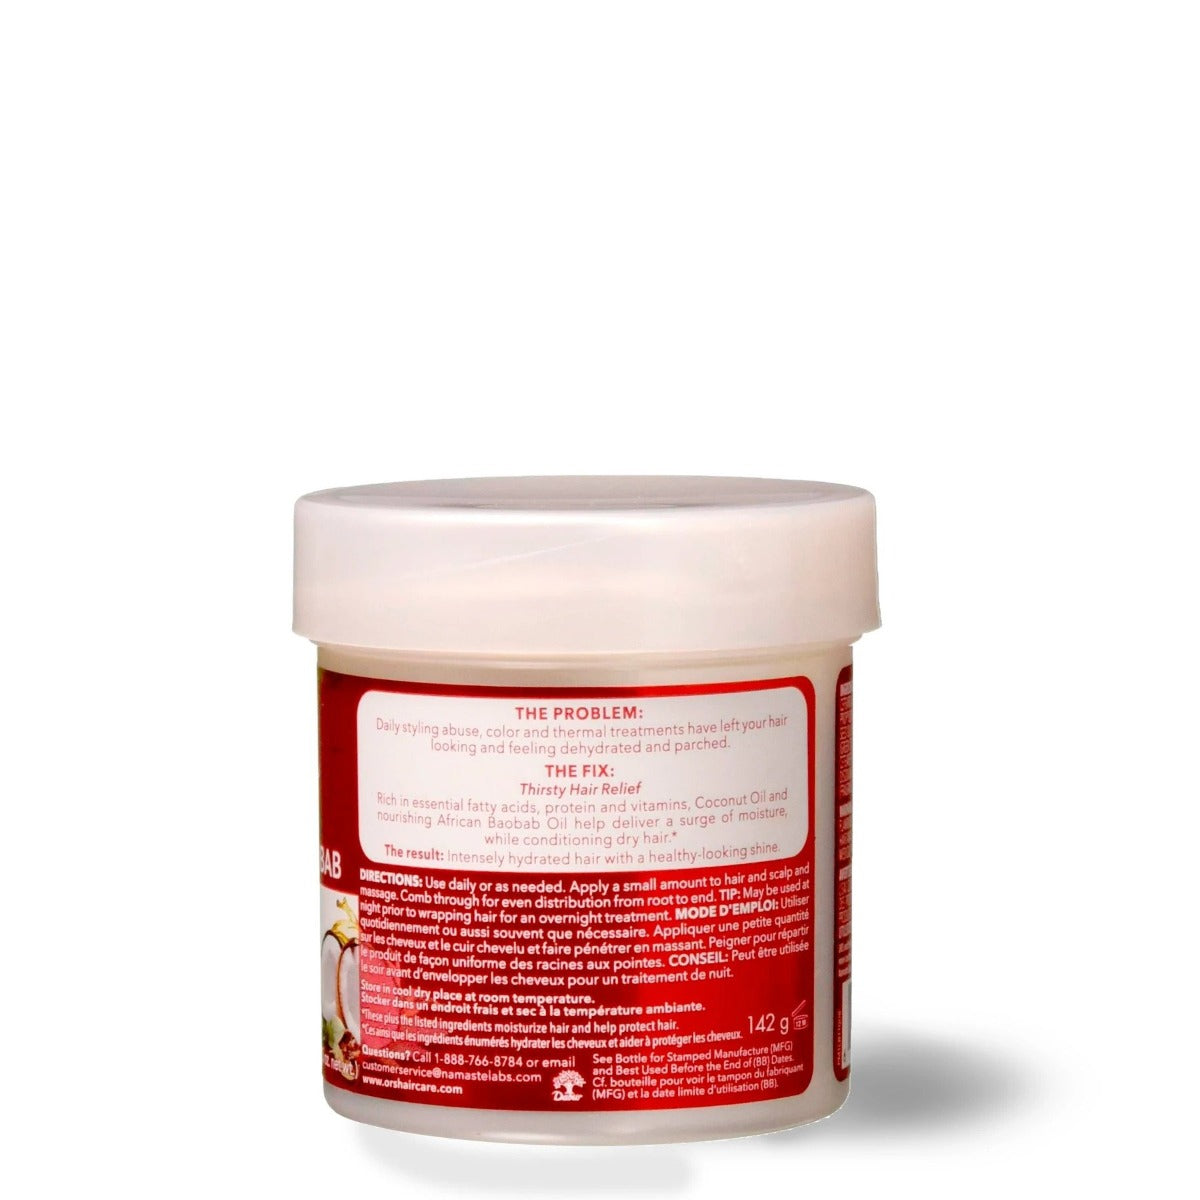 ORS HAIRepair Coconut Oil & Baobab Intense Moisture Crème 142g